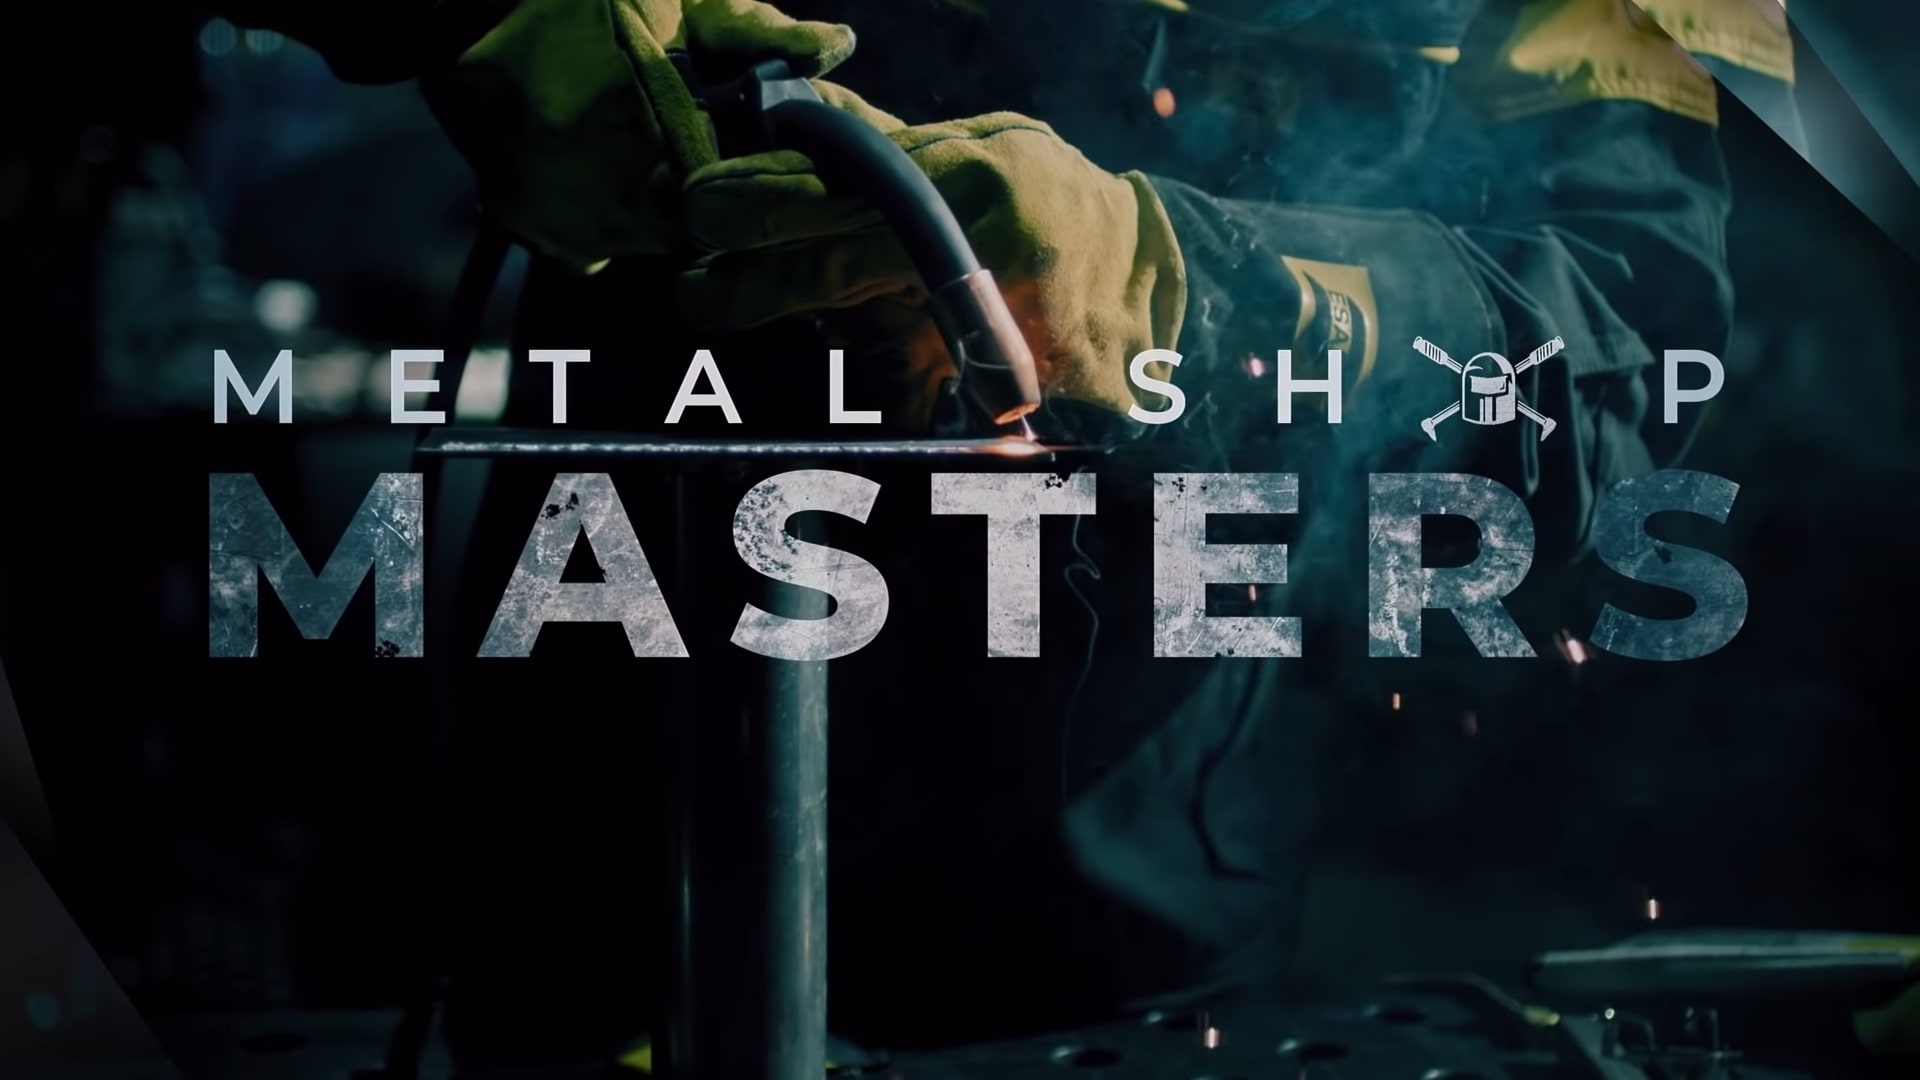 Netflix Metal Shop Masters Season 1 Trailer, Coming to Netflix in September 2021